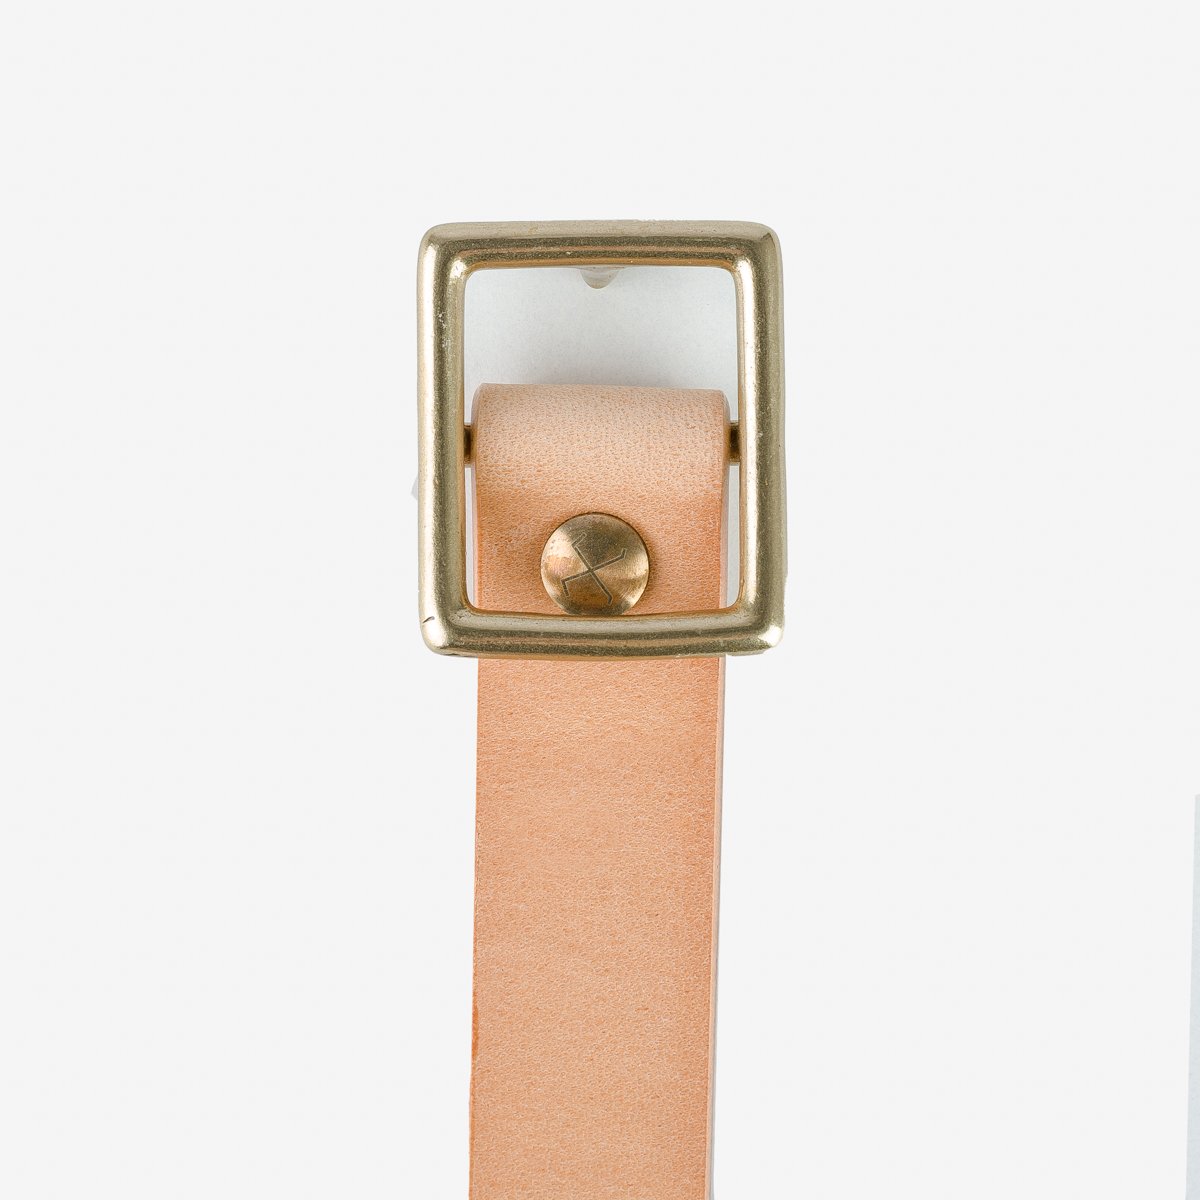 OGL Square Brass ‘Prongless’ Buckle Leather Belt - Natural